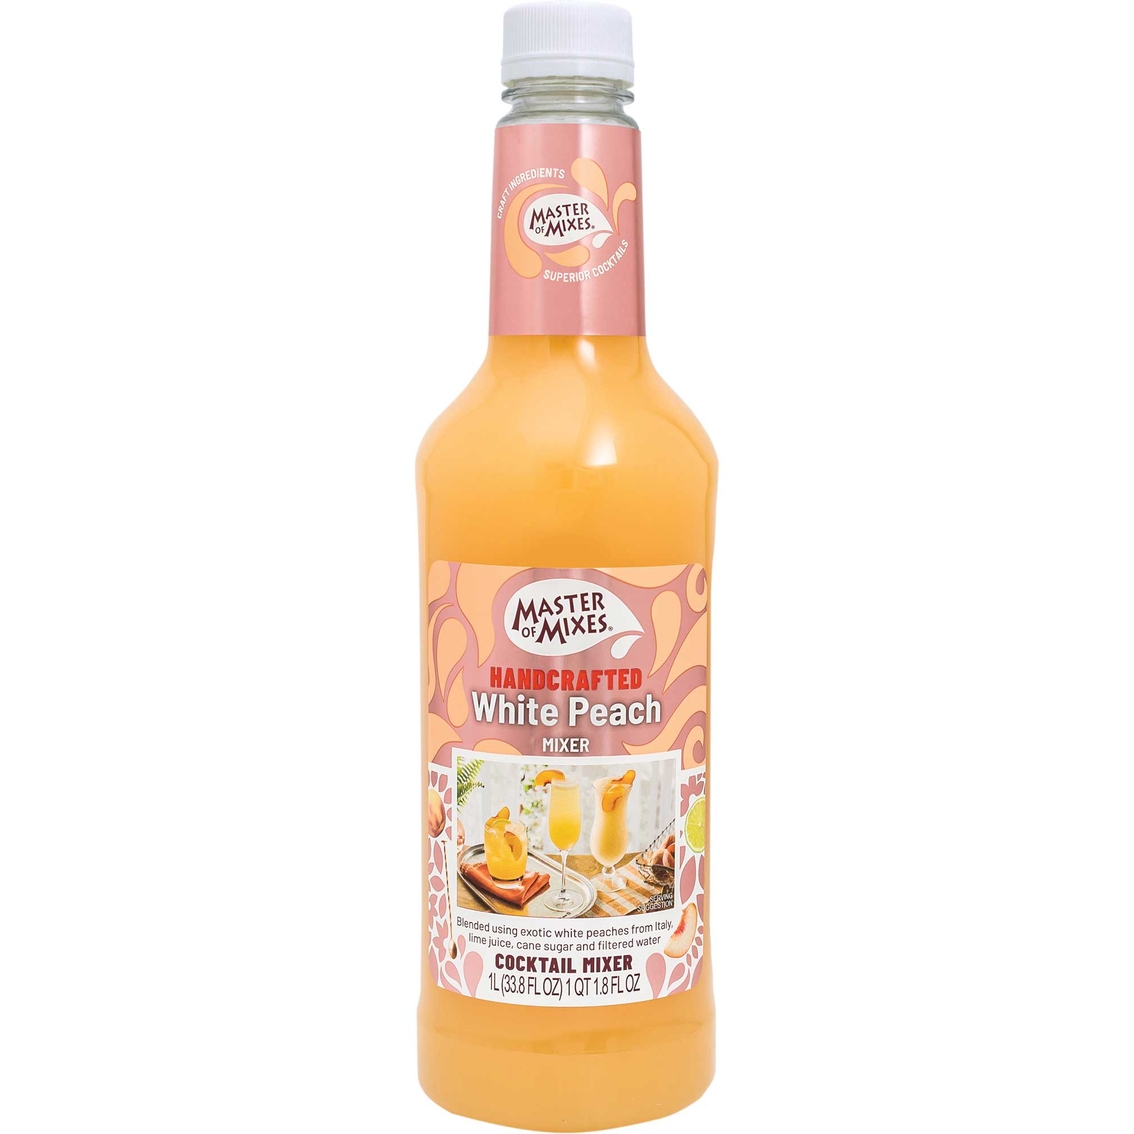 Master of Mixes White Peach Daiquiri Margarita 1L - Image 1 of 2